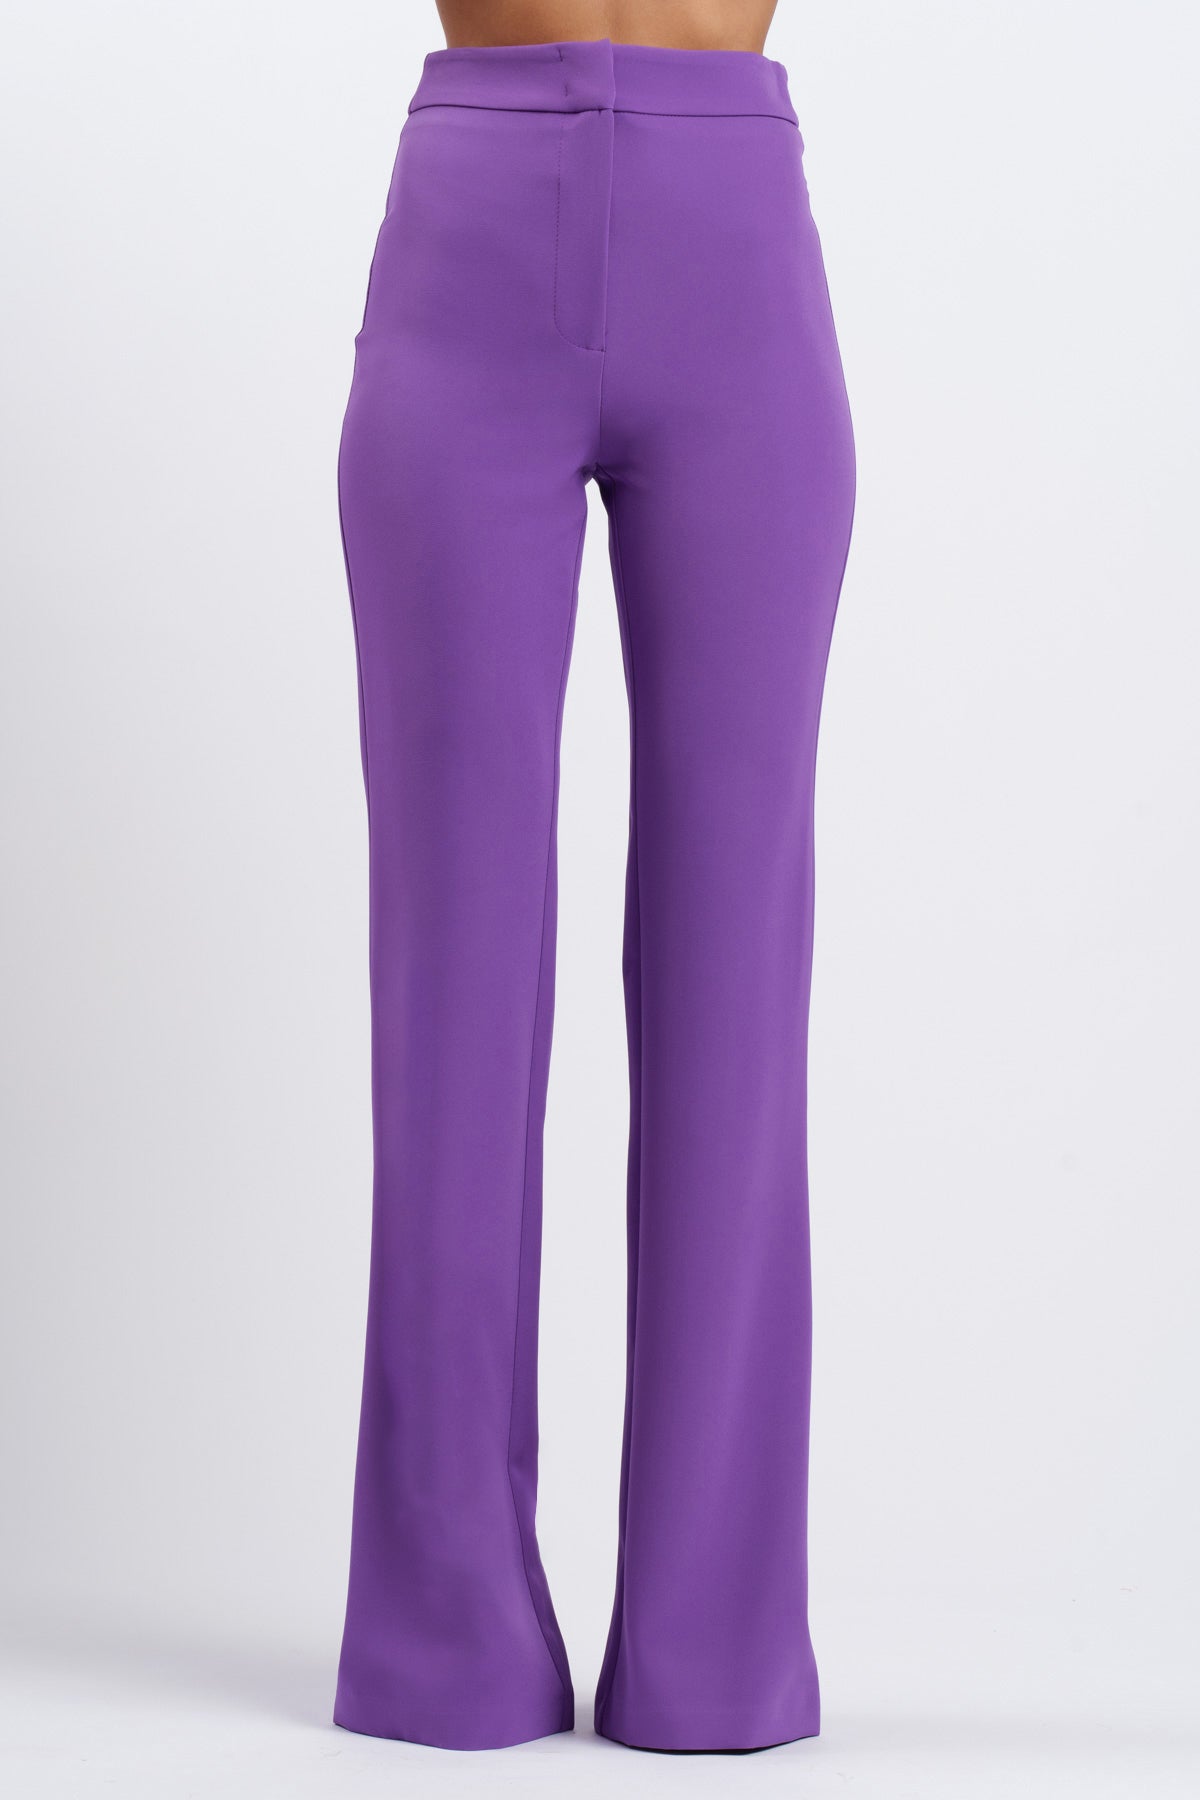 Libra Violet Half Leg Pants